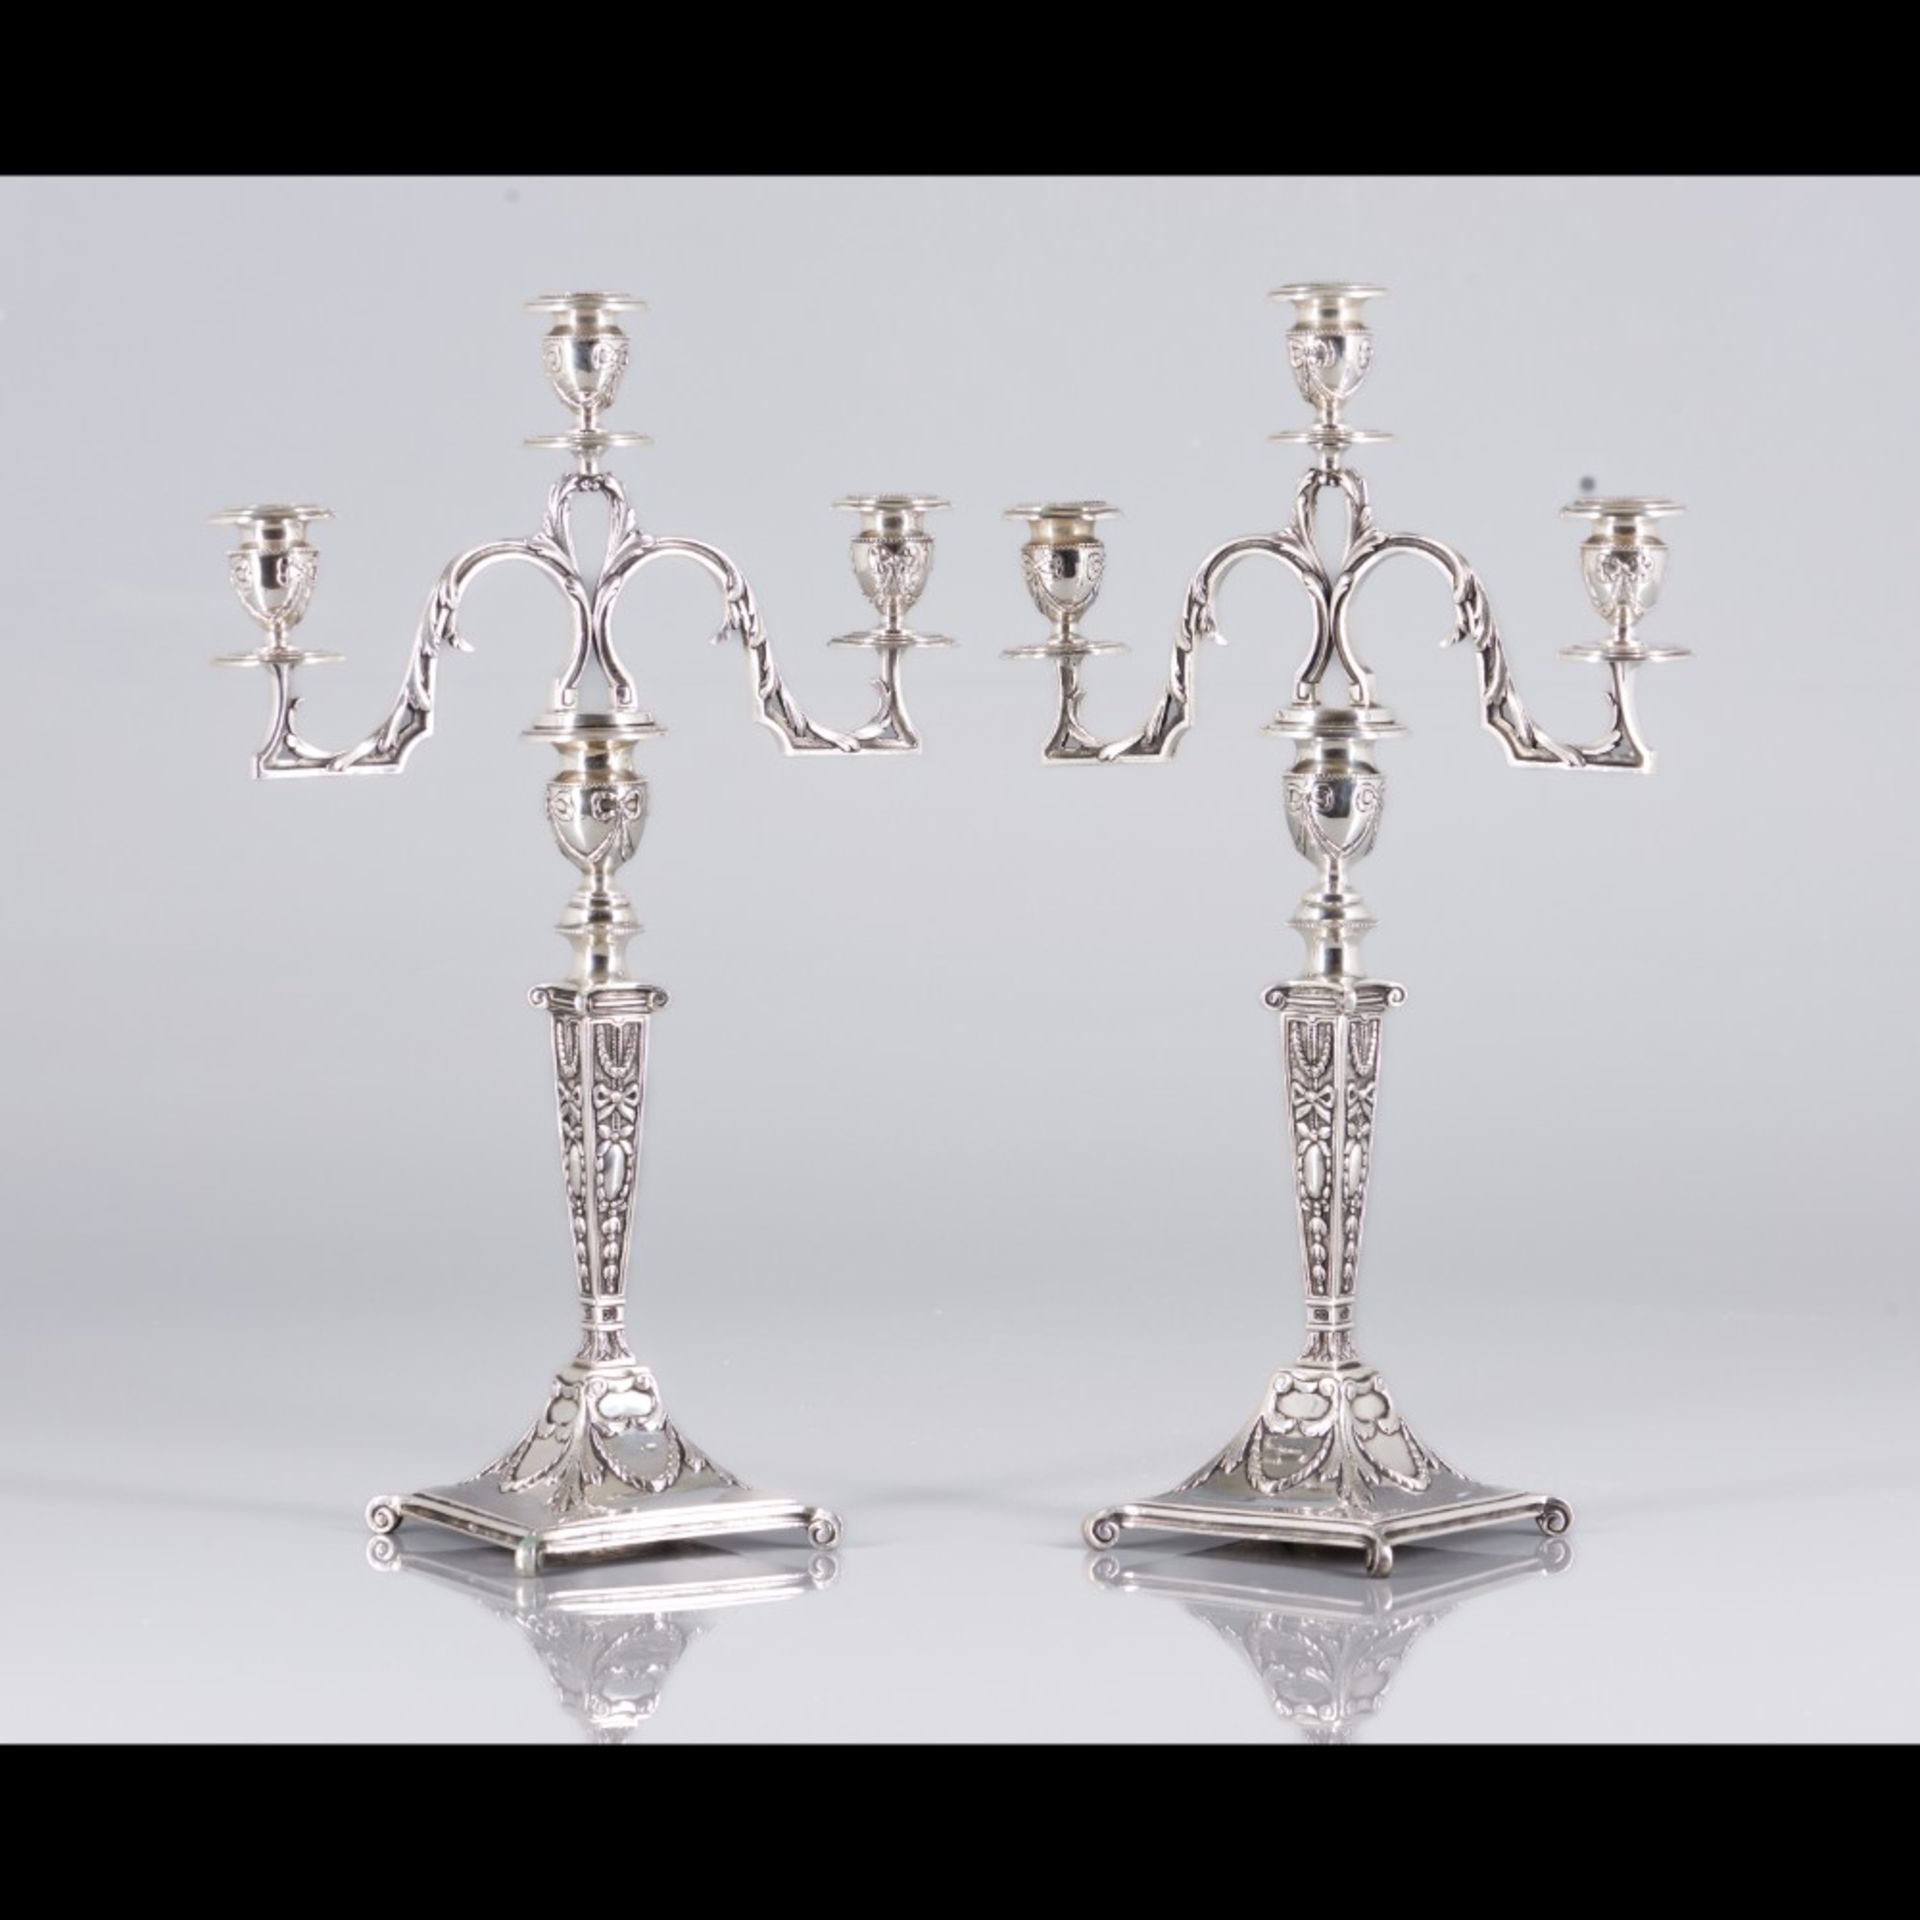  A pair of three branch candelabra